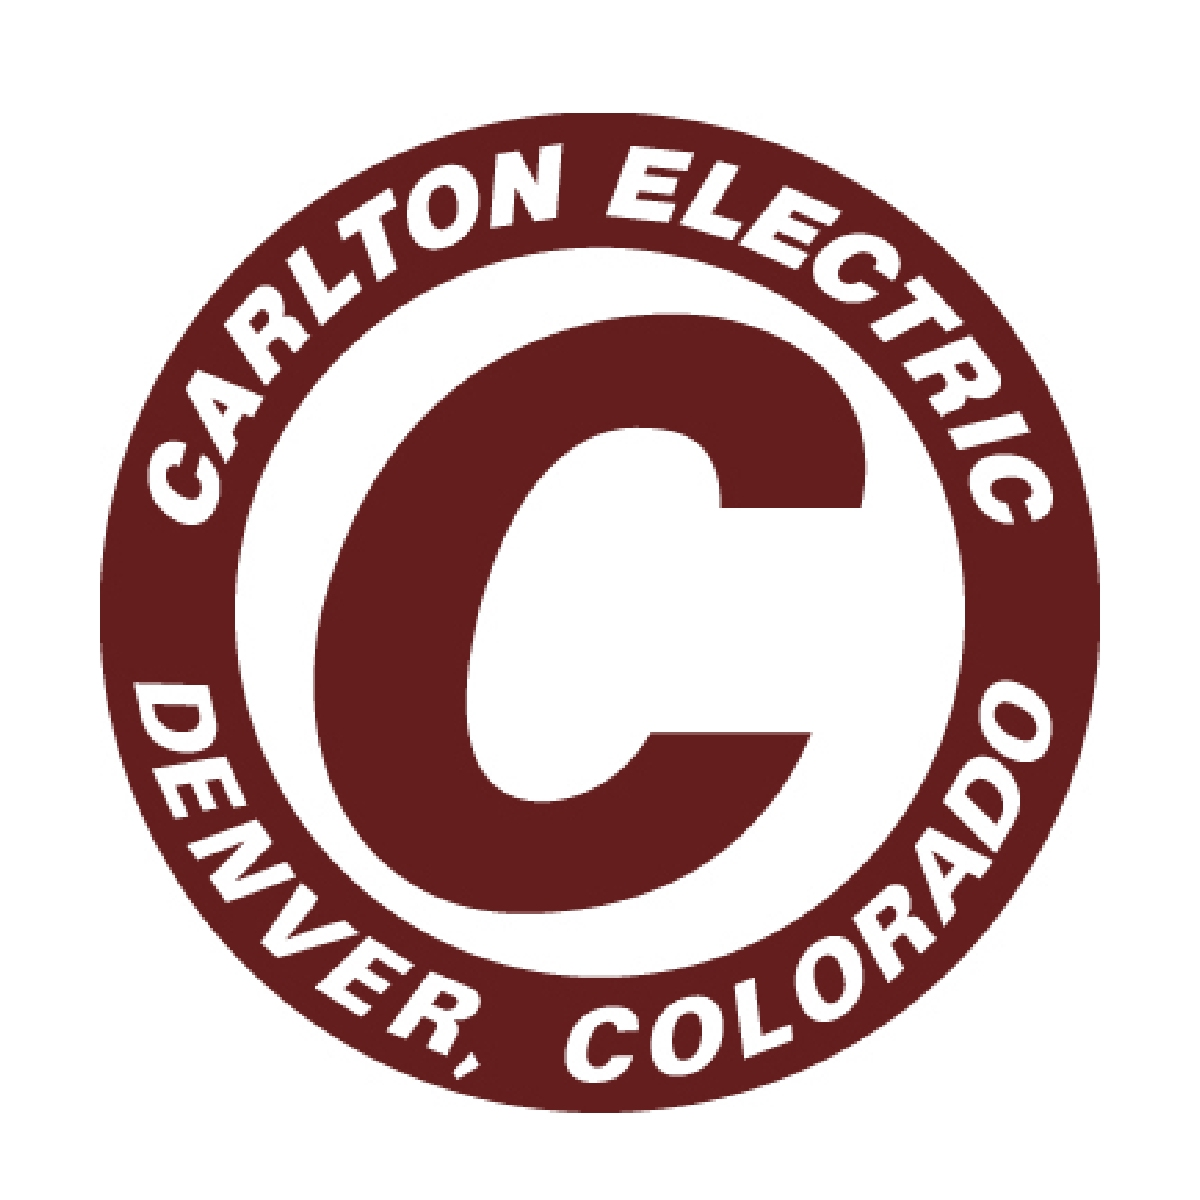 Carlton Electric logo